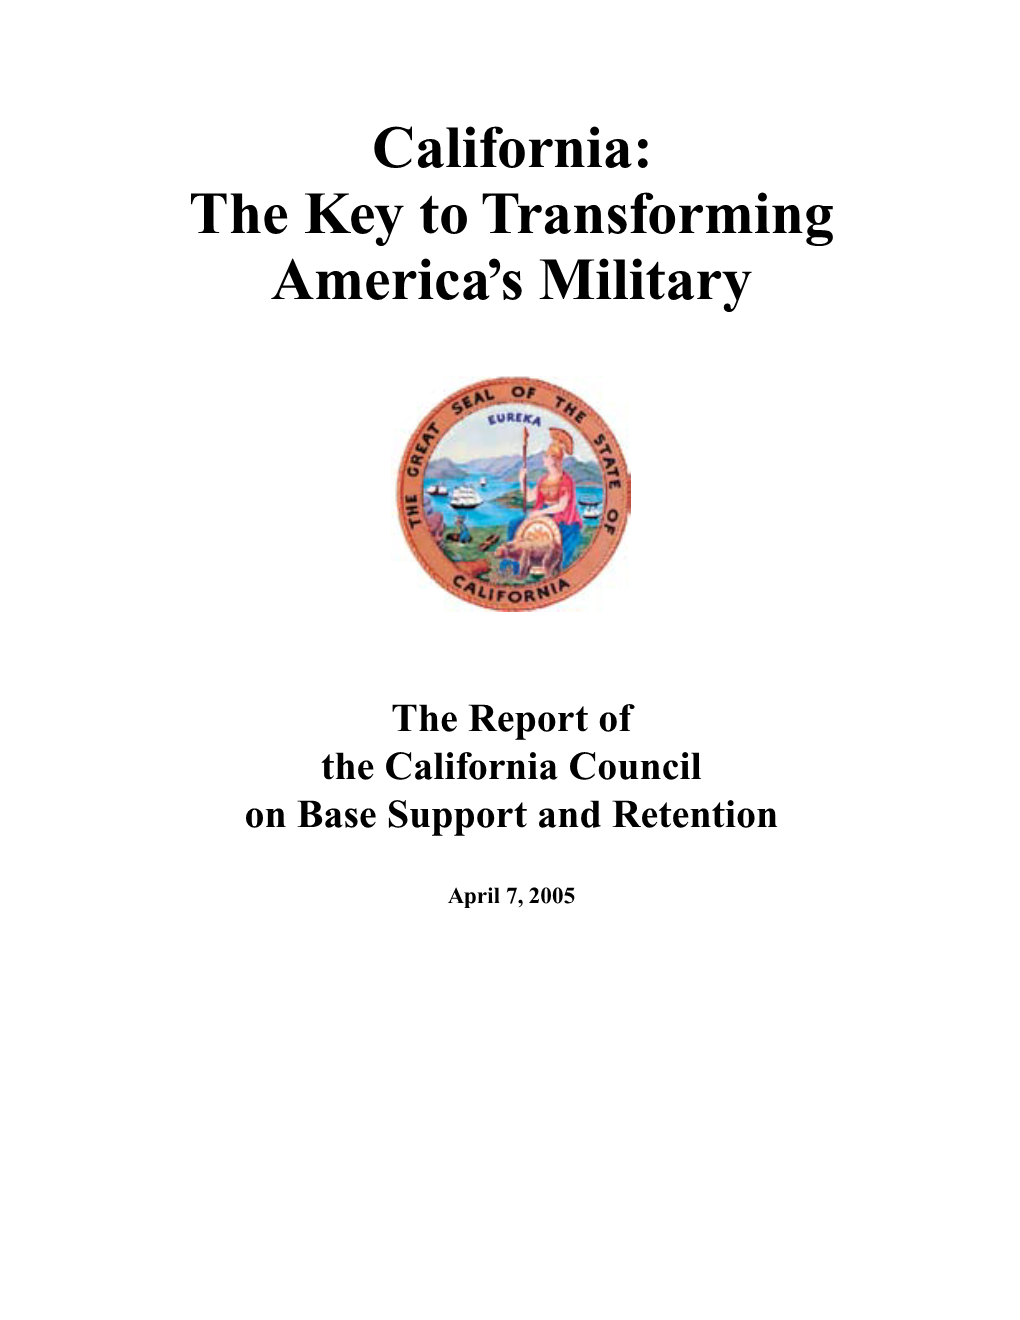 California: the Key to Transforming America's Military